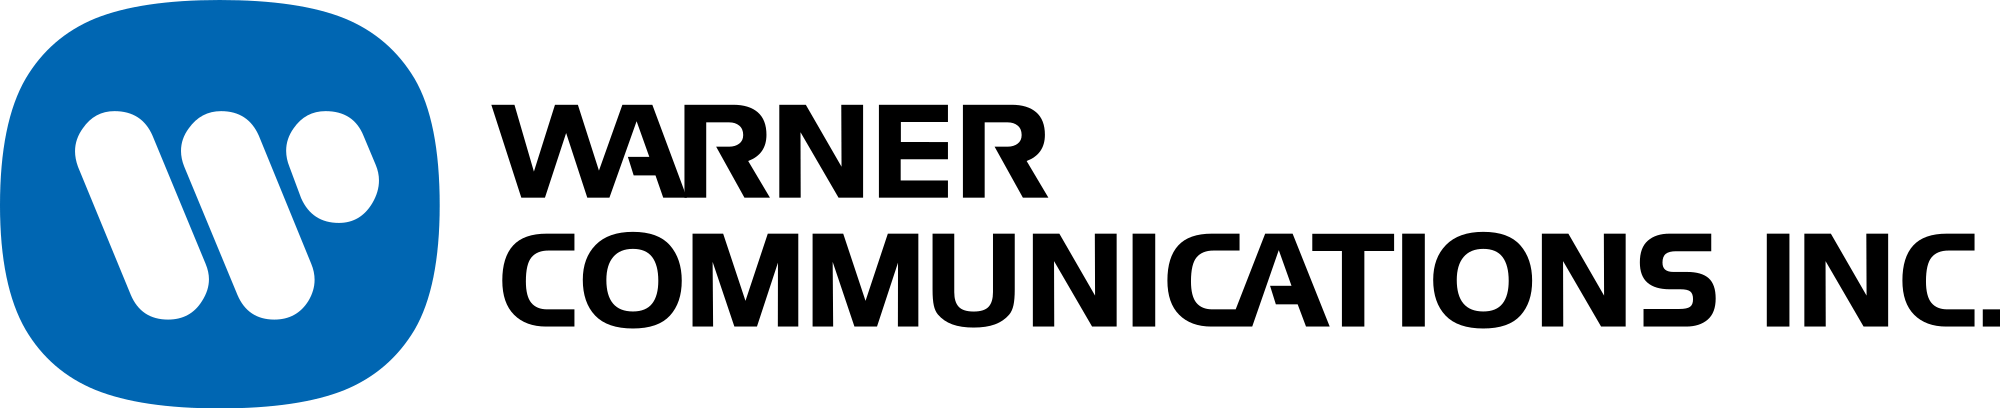 Warner Communications Logo - File:Warner Communications.svg - Wikimedia Commons